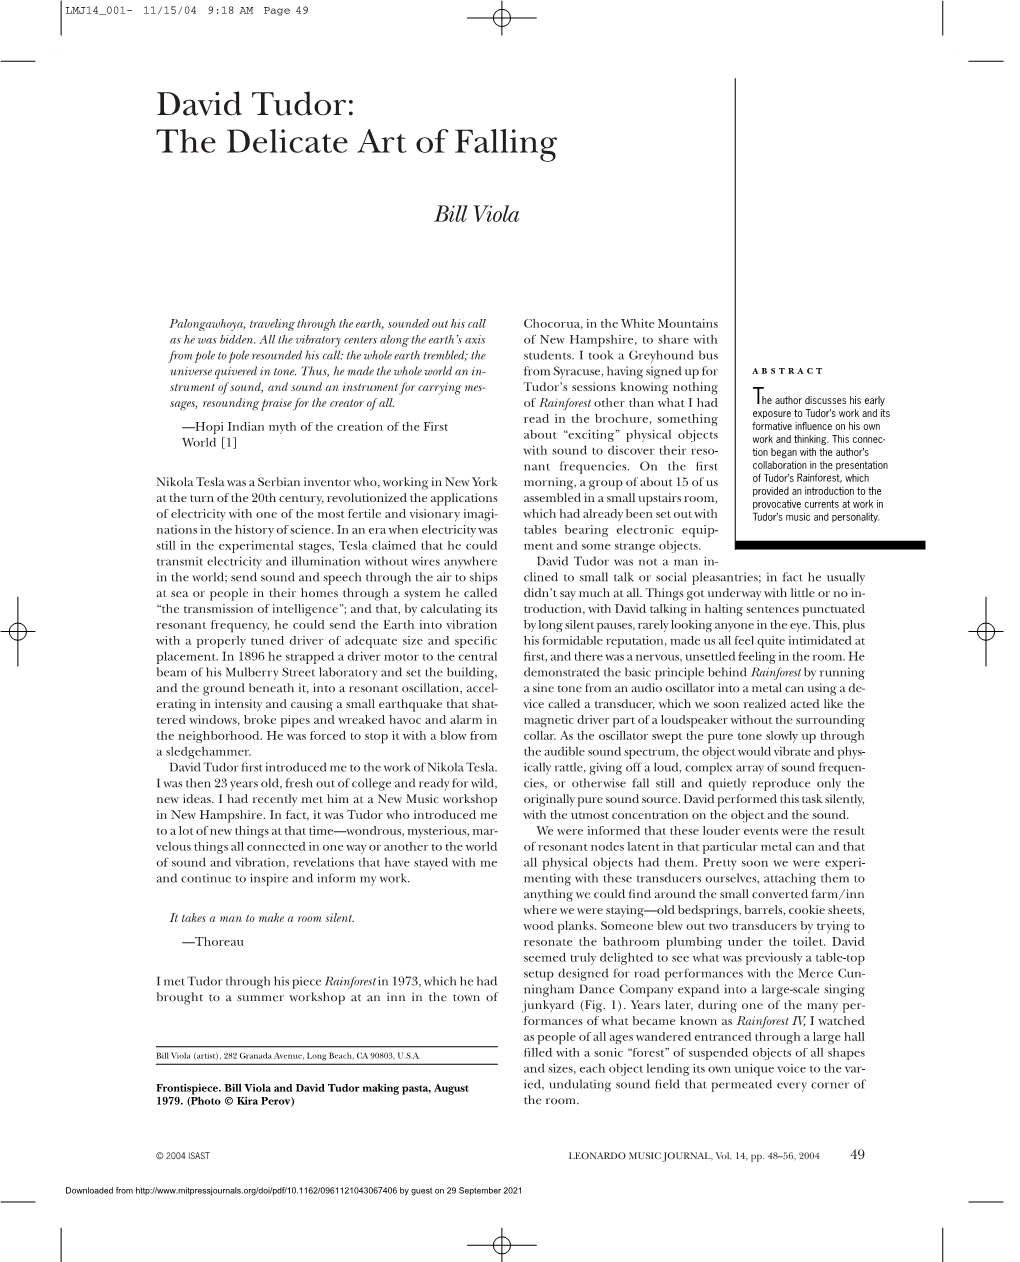 David Tudor: the Delicate Art of Falling